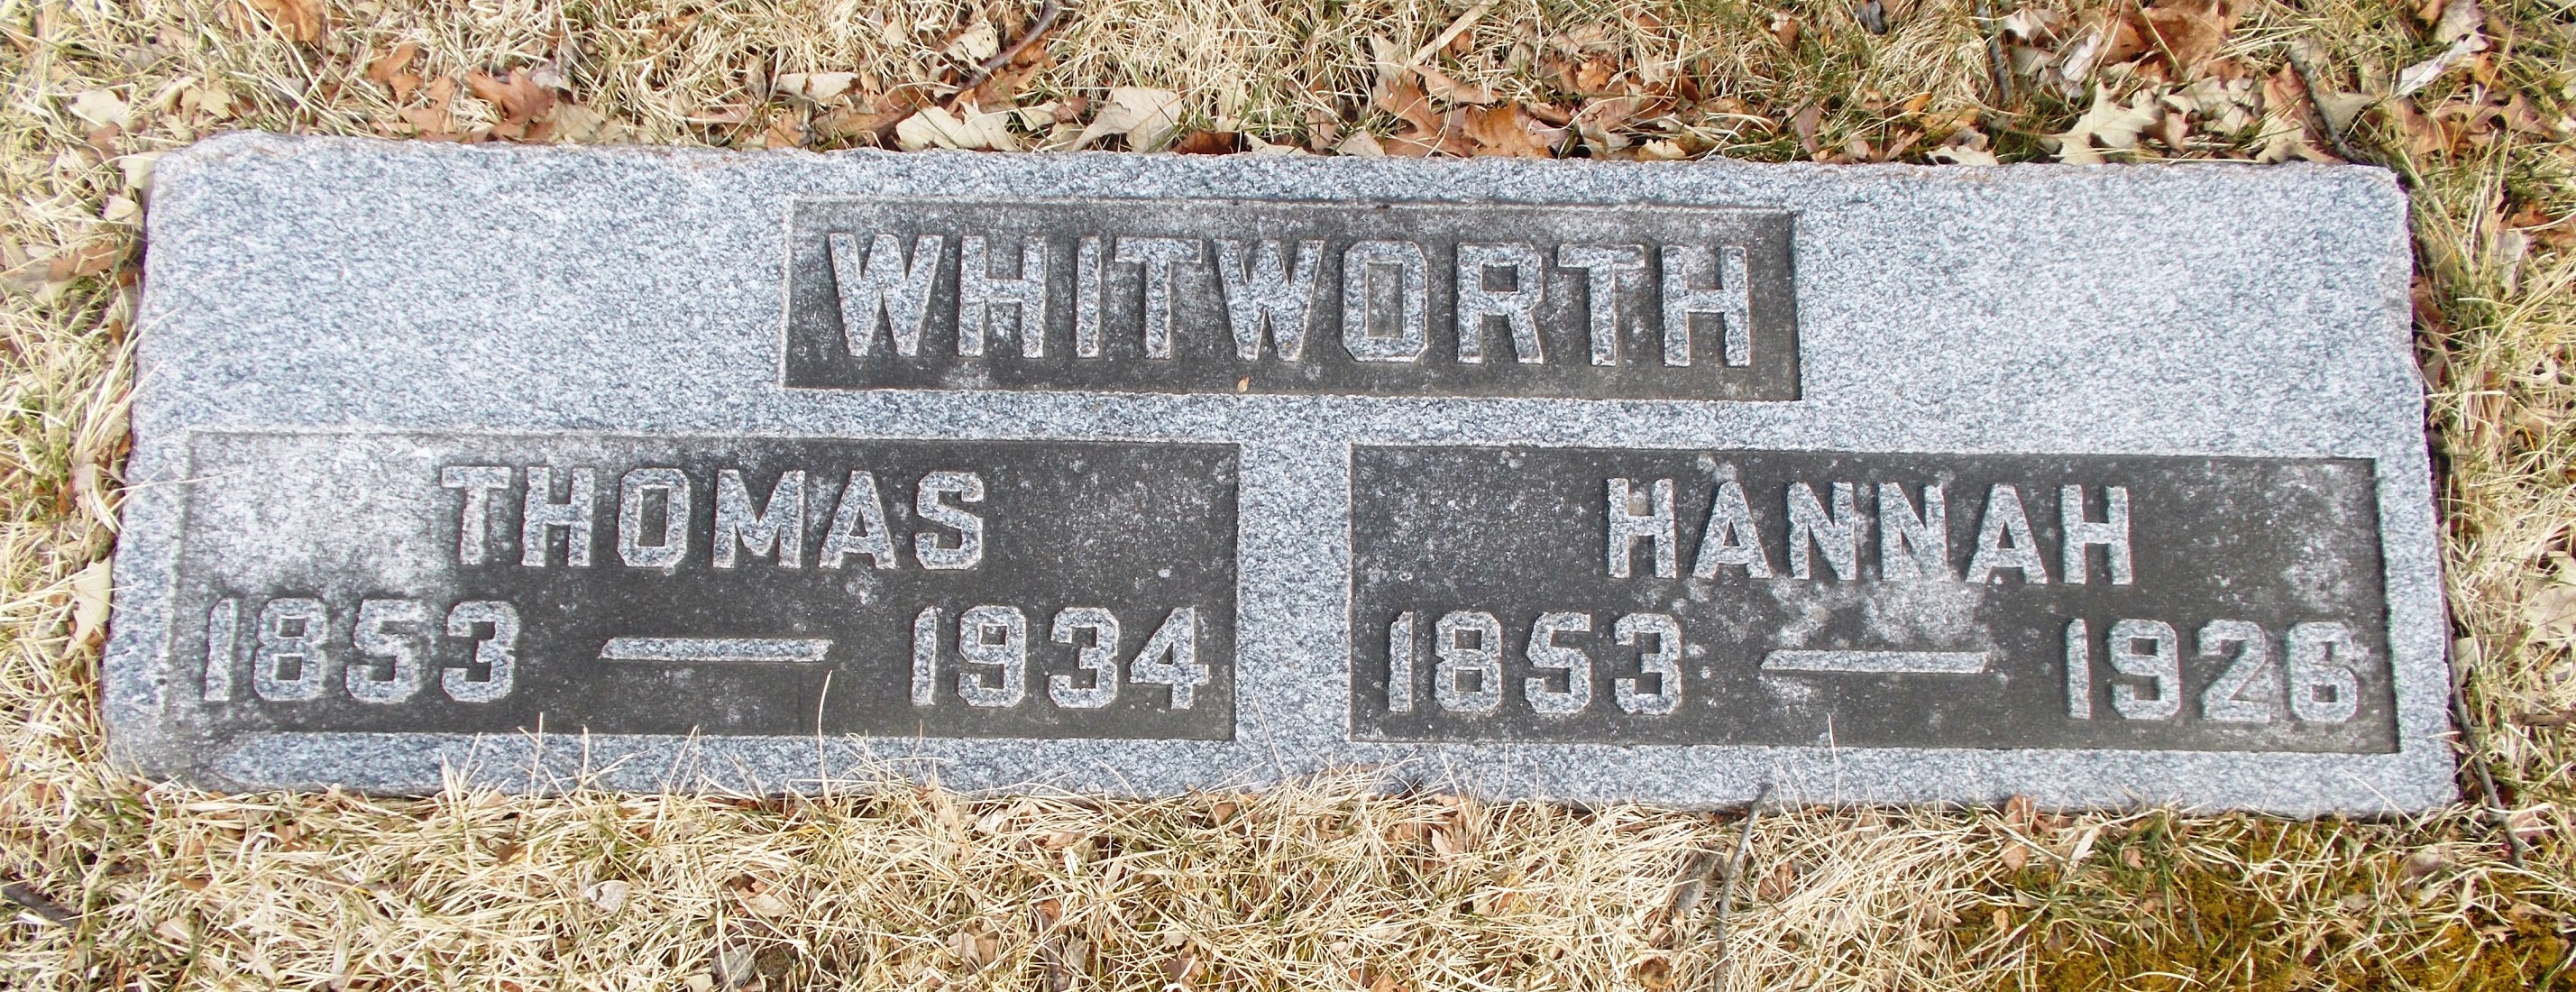 Thomas Whitworth